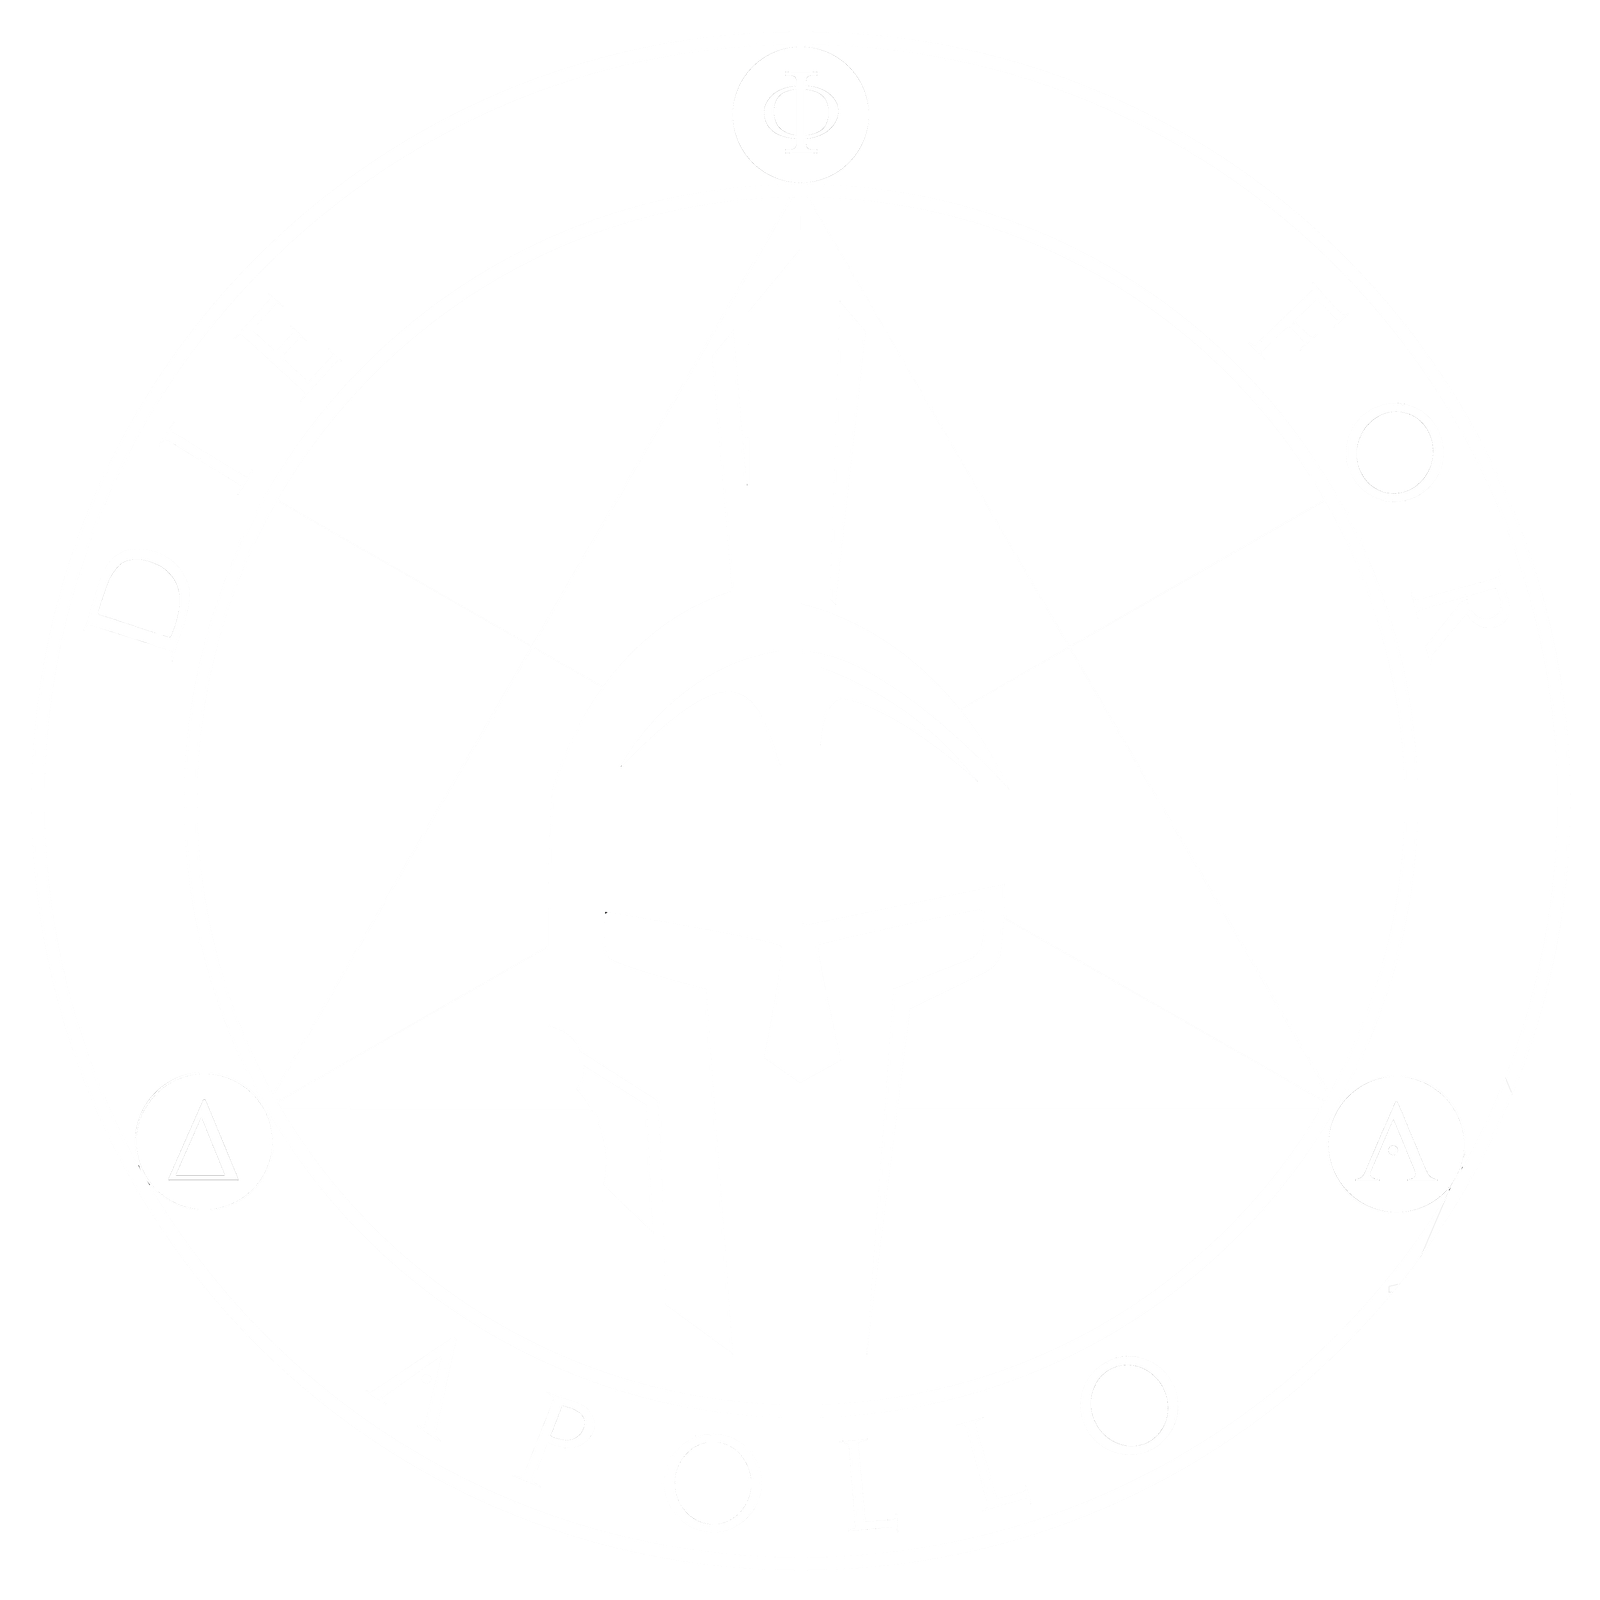 Die For Apollo